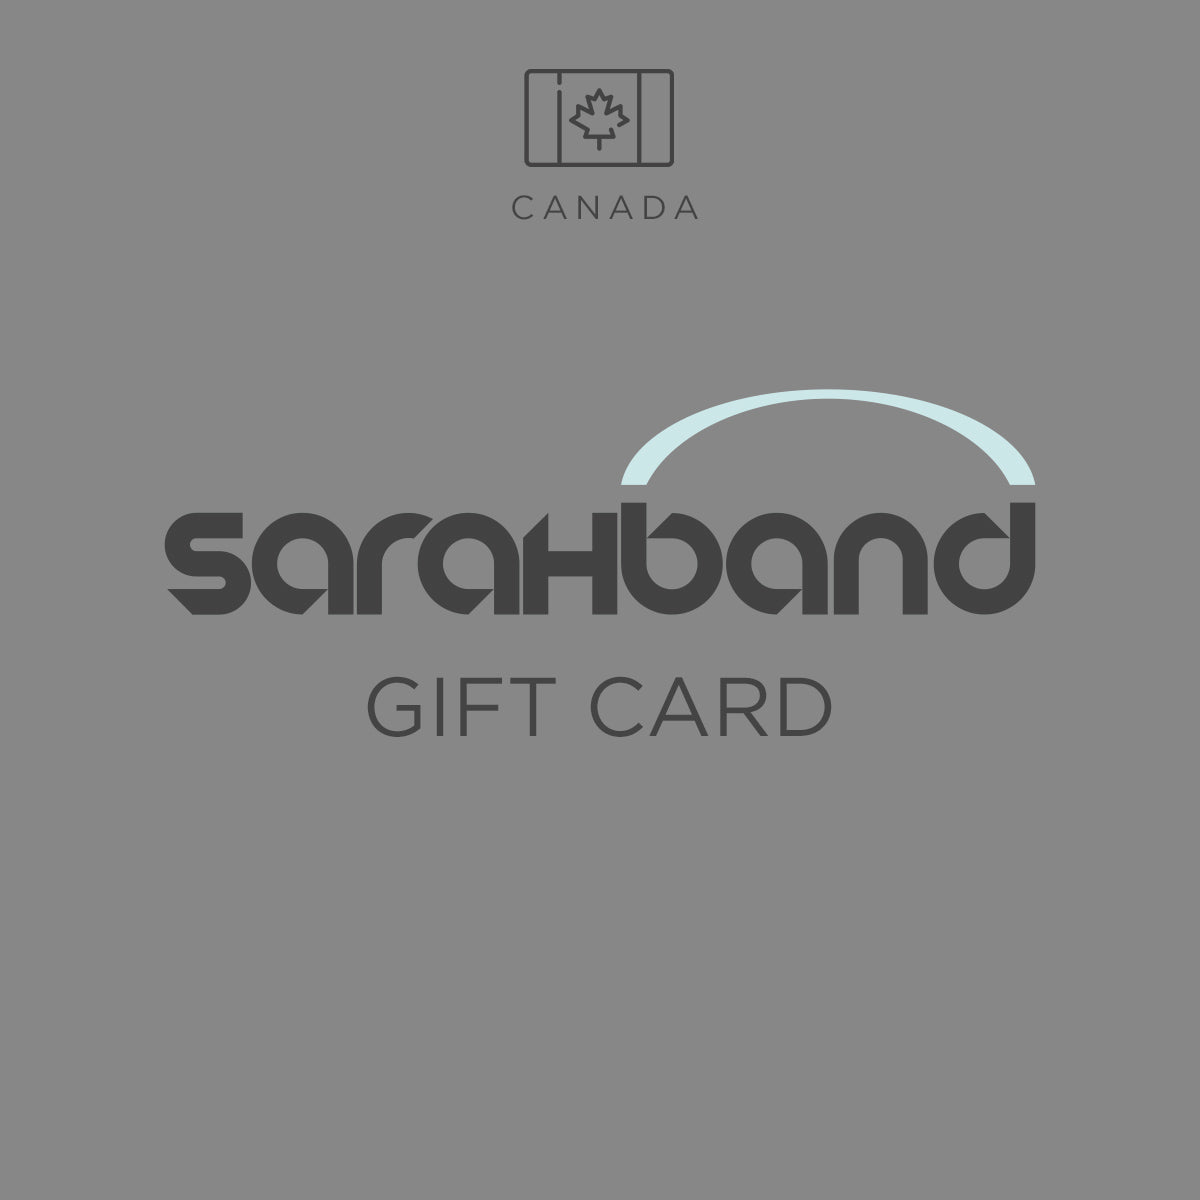 Sarahband Gift Card - Canada